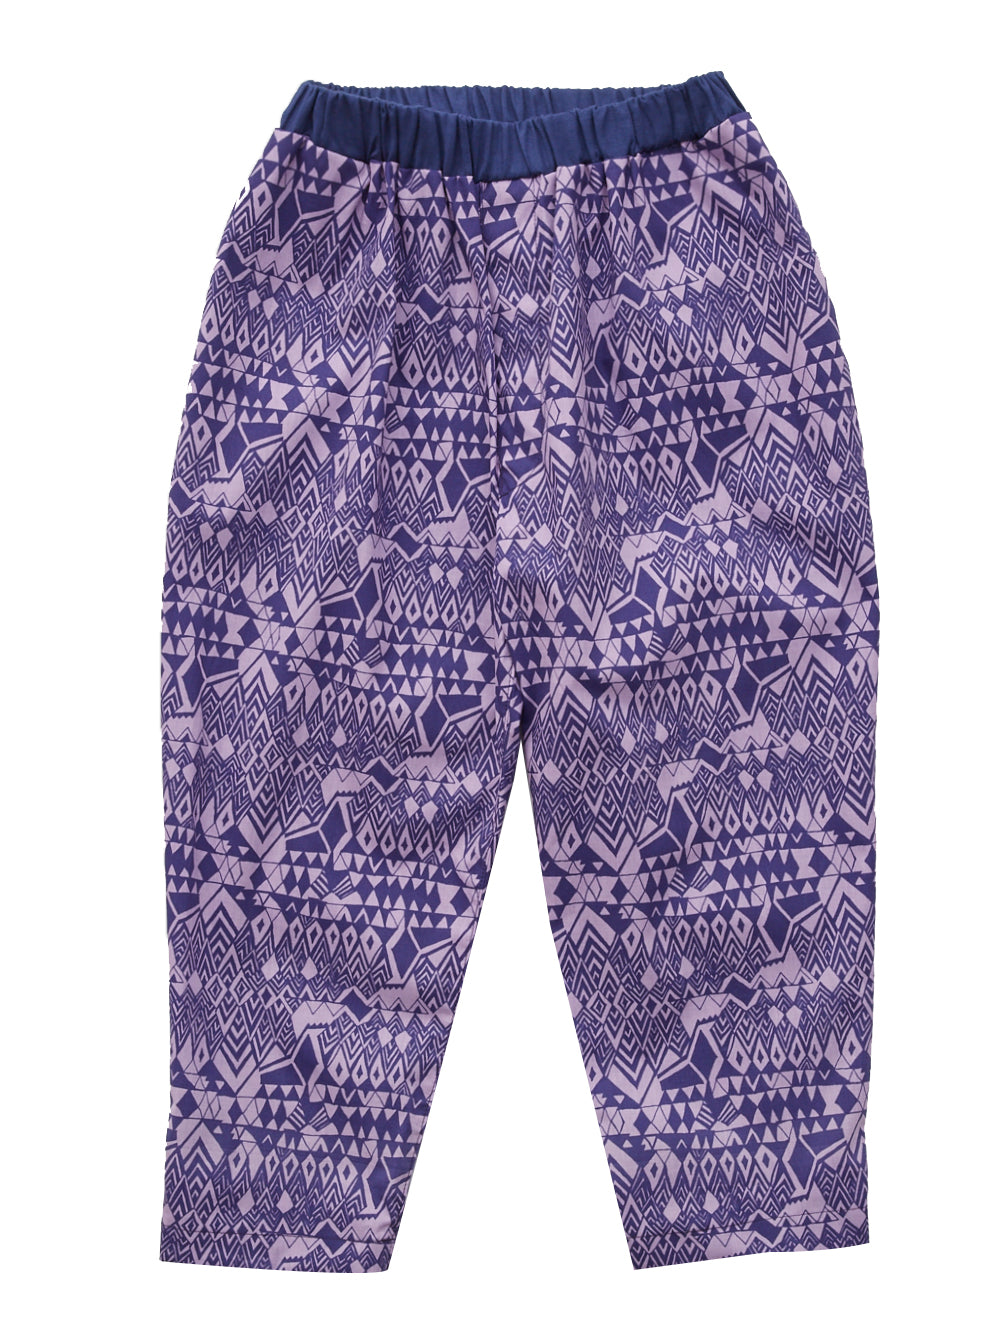 Folk Art Print Purple Pants